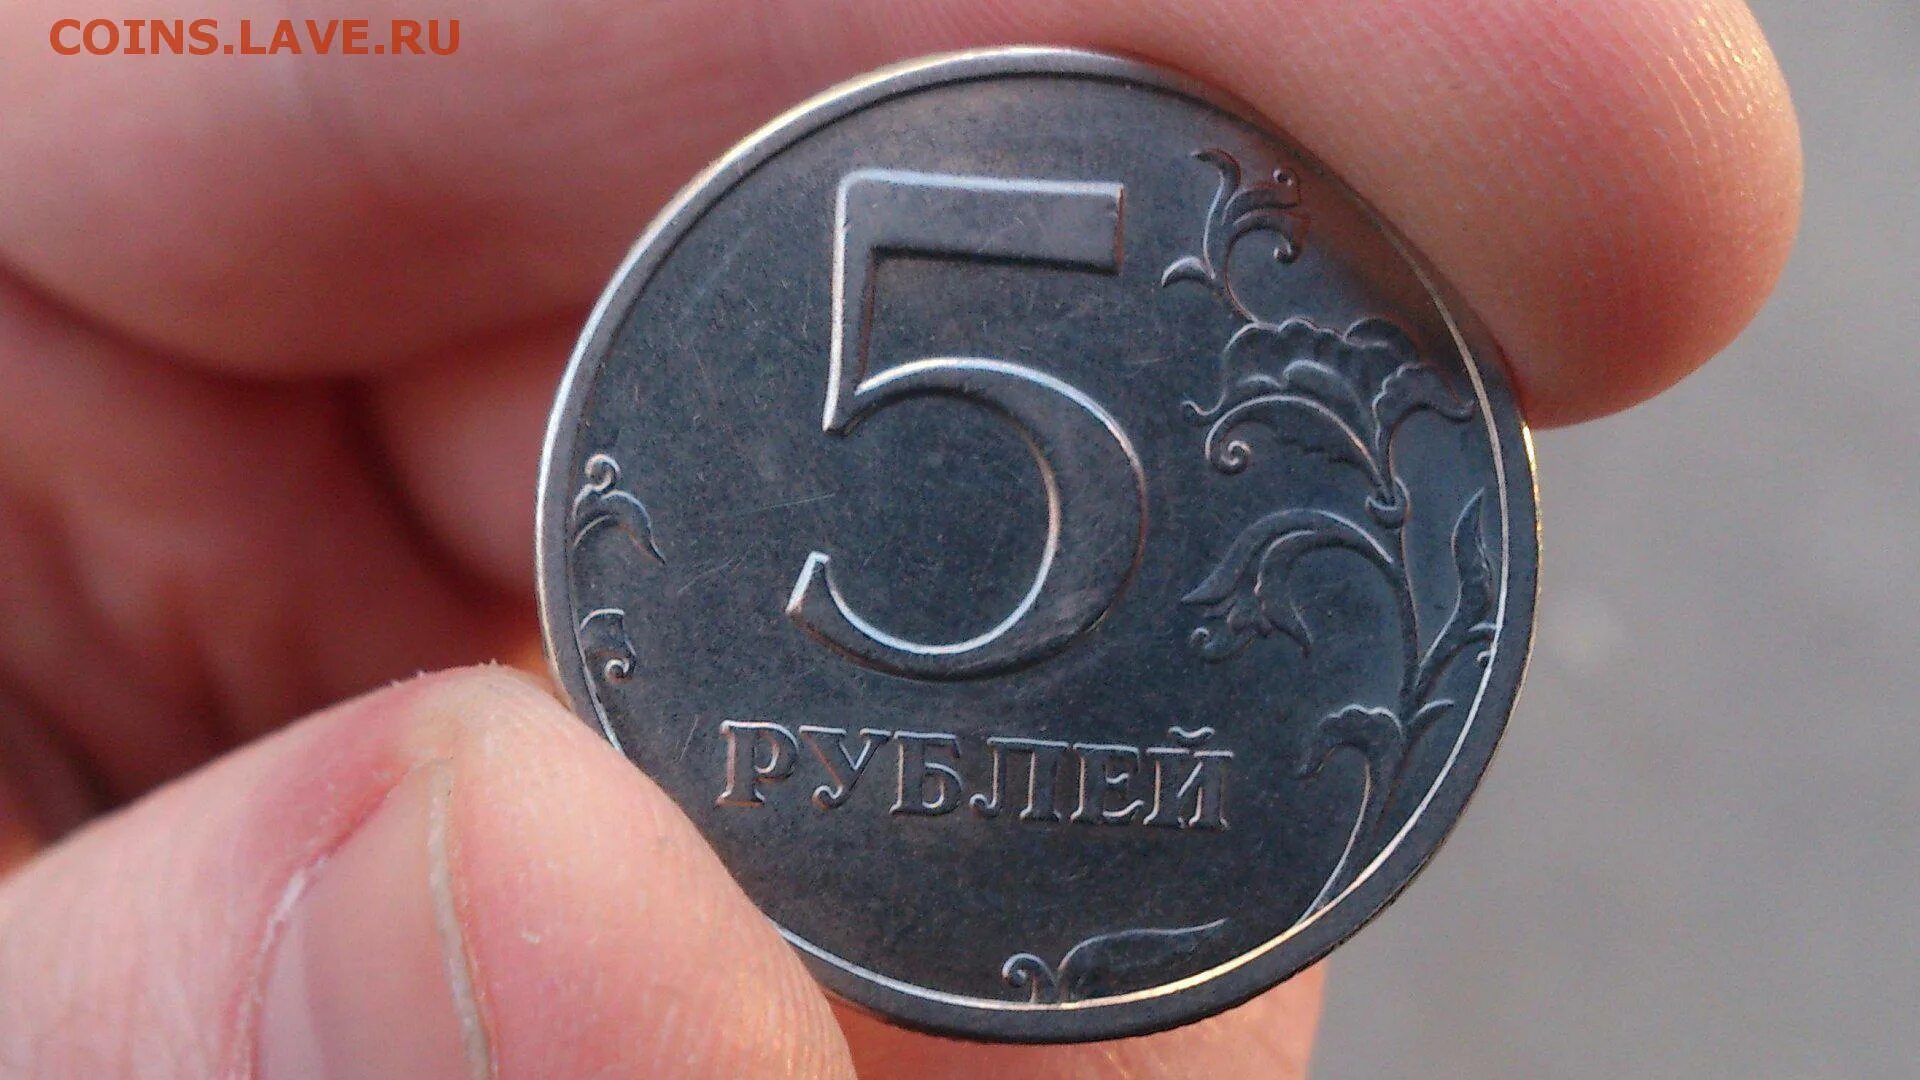 5 рублей тираж. Монеты. Монеты рубли. Монета 5 рублей в руке. Монетка 5 рублей.